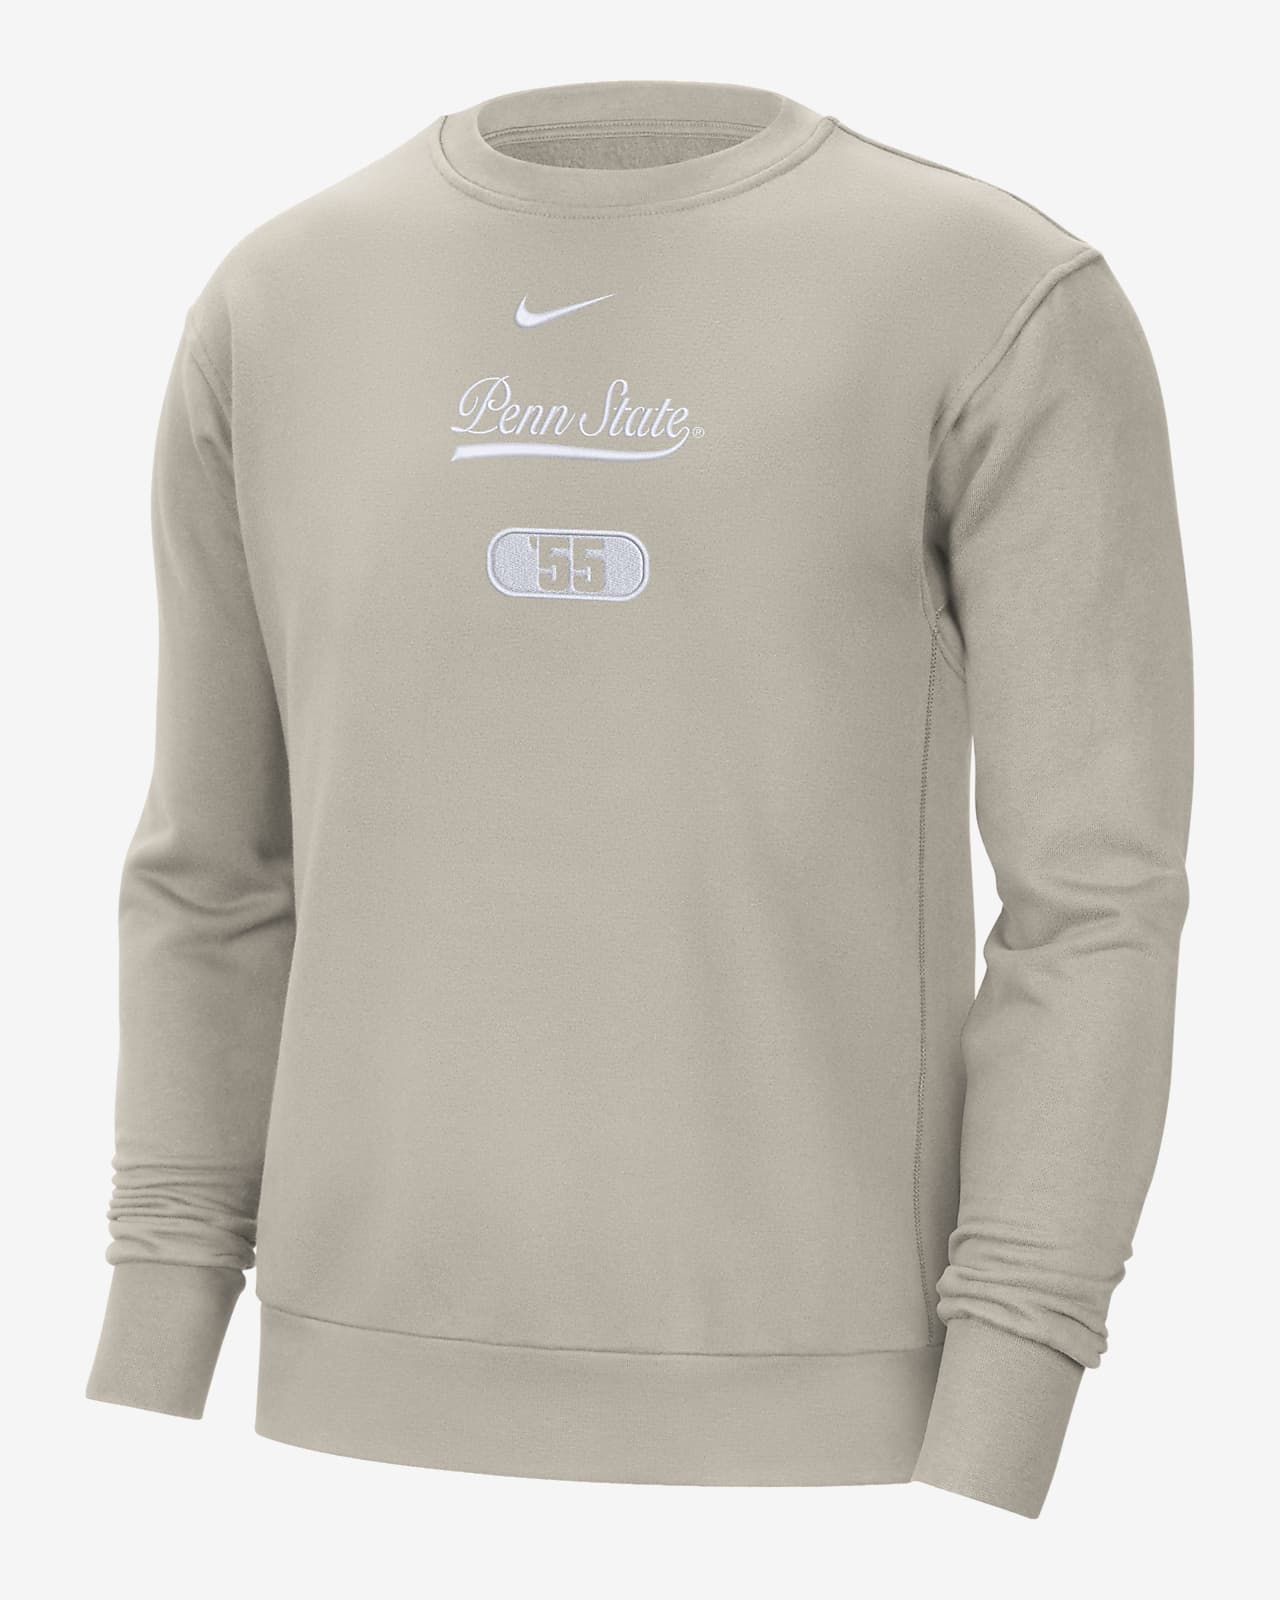 Penn State Nike Men's Basketball Hooded Sweatshirt